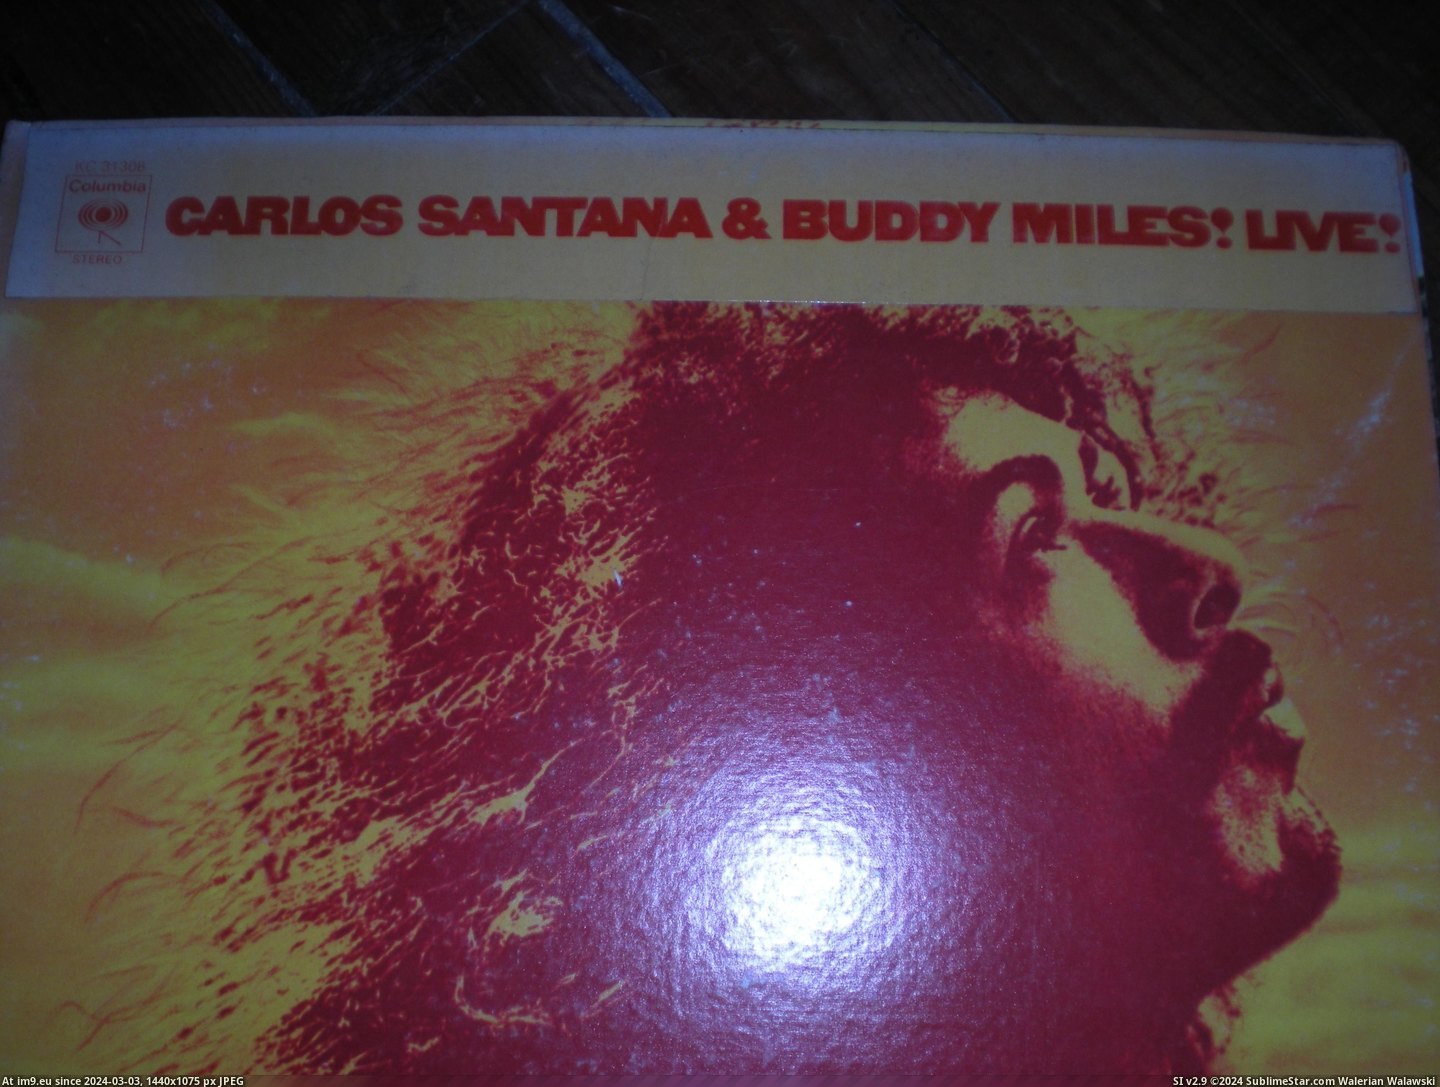 #Buddy #Santana #Miles Santana Buddy Miles 7 Pic. (Image of album new 1))